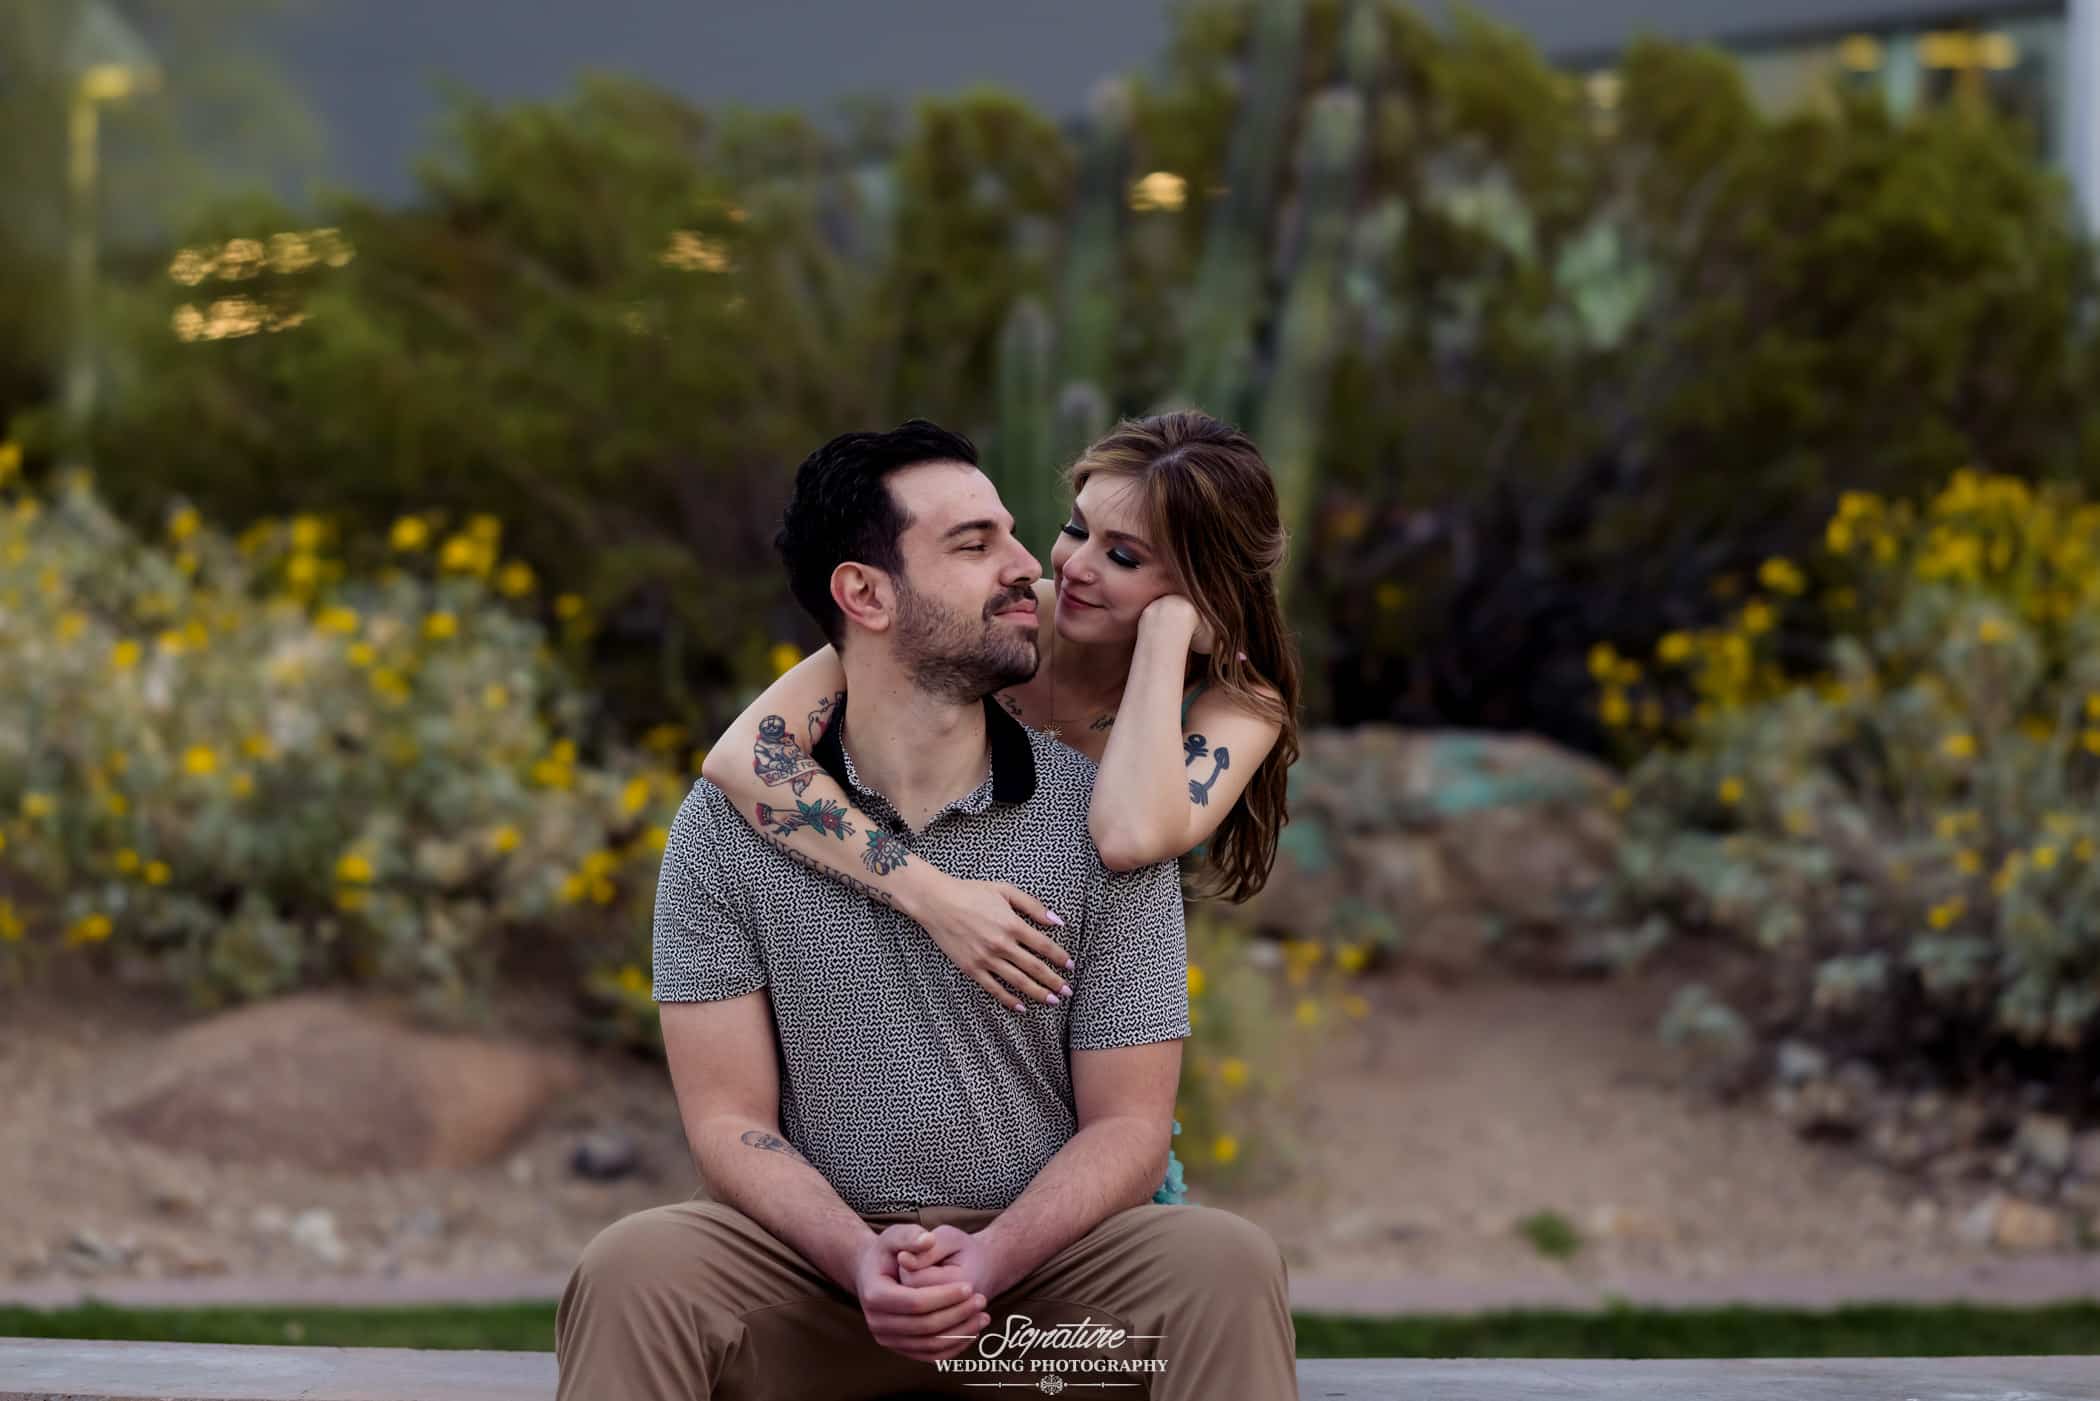 Woman's arm around man's shoulders engagement photo